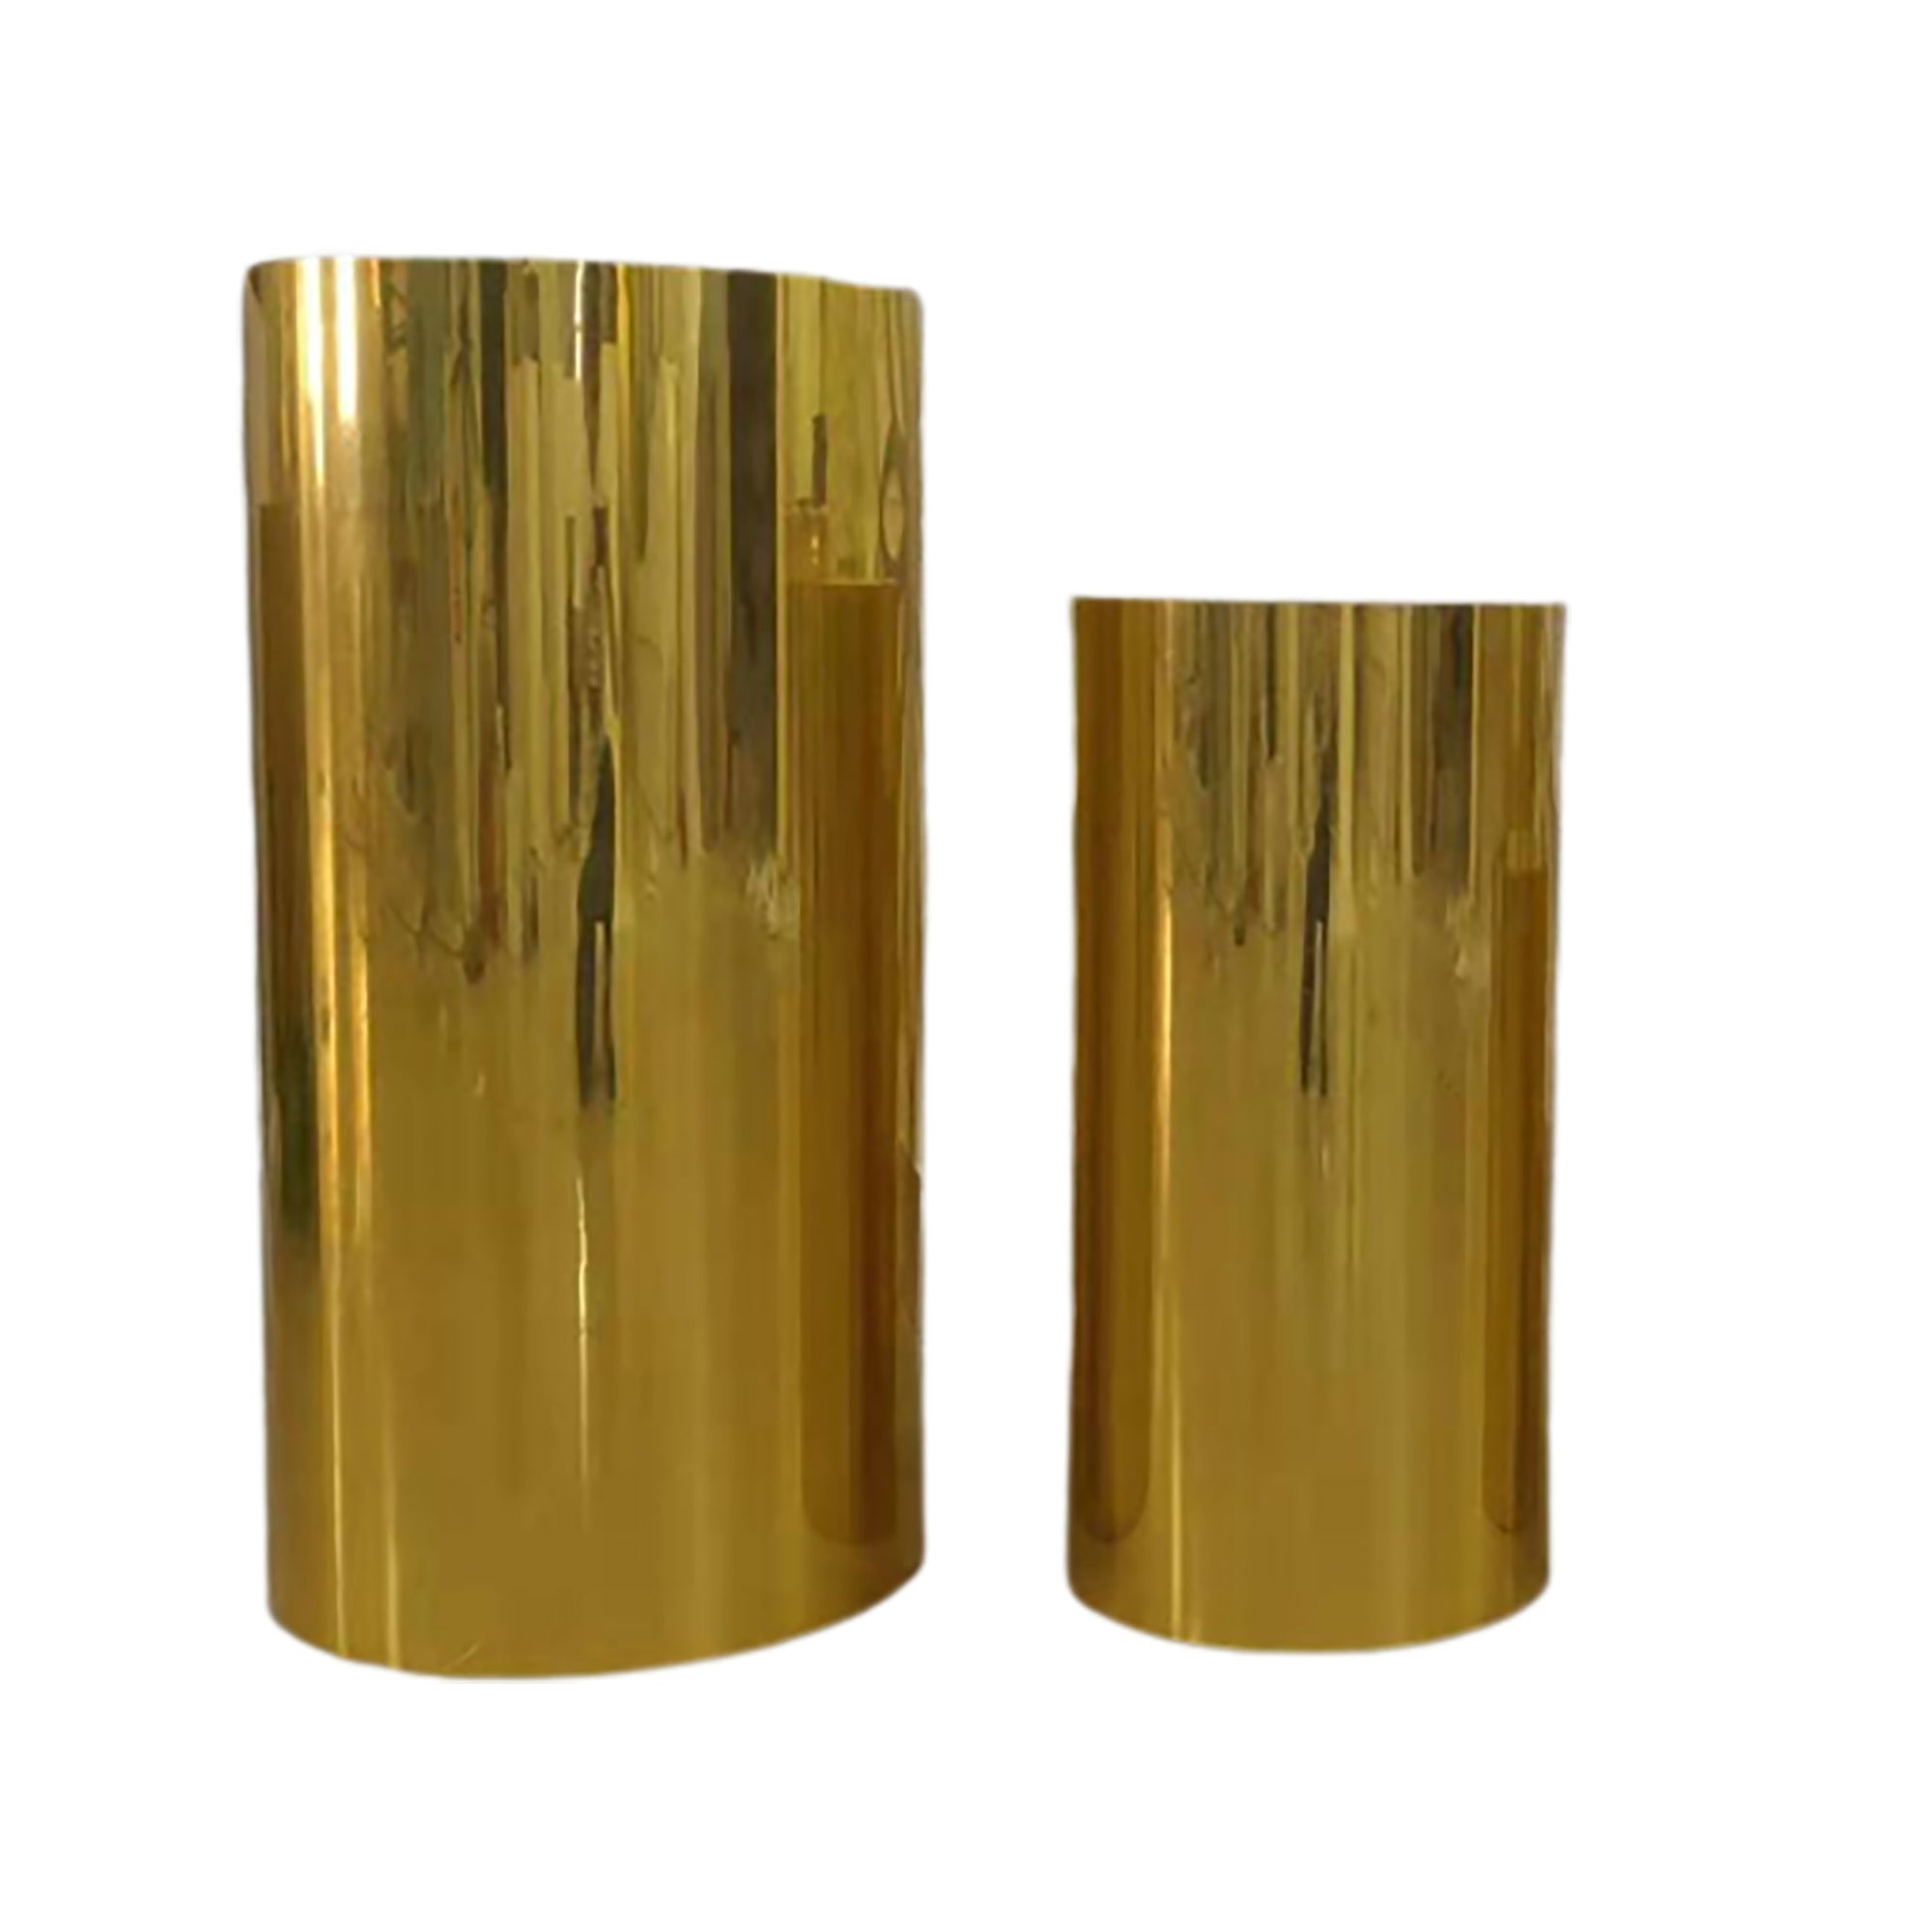 Acrylic cylinder pedestal